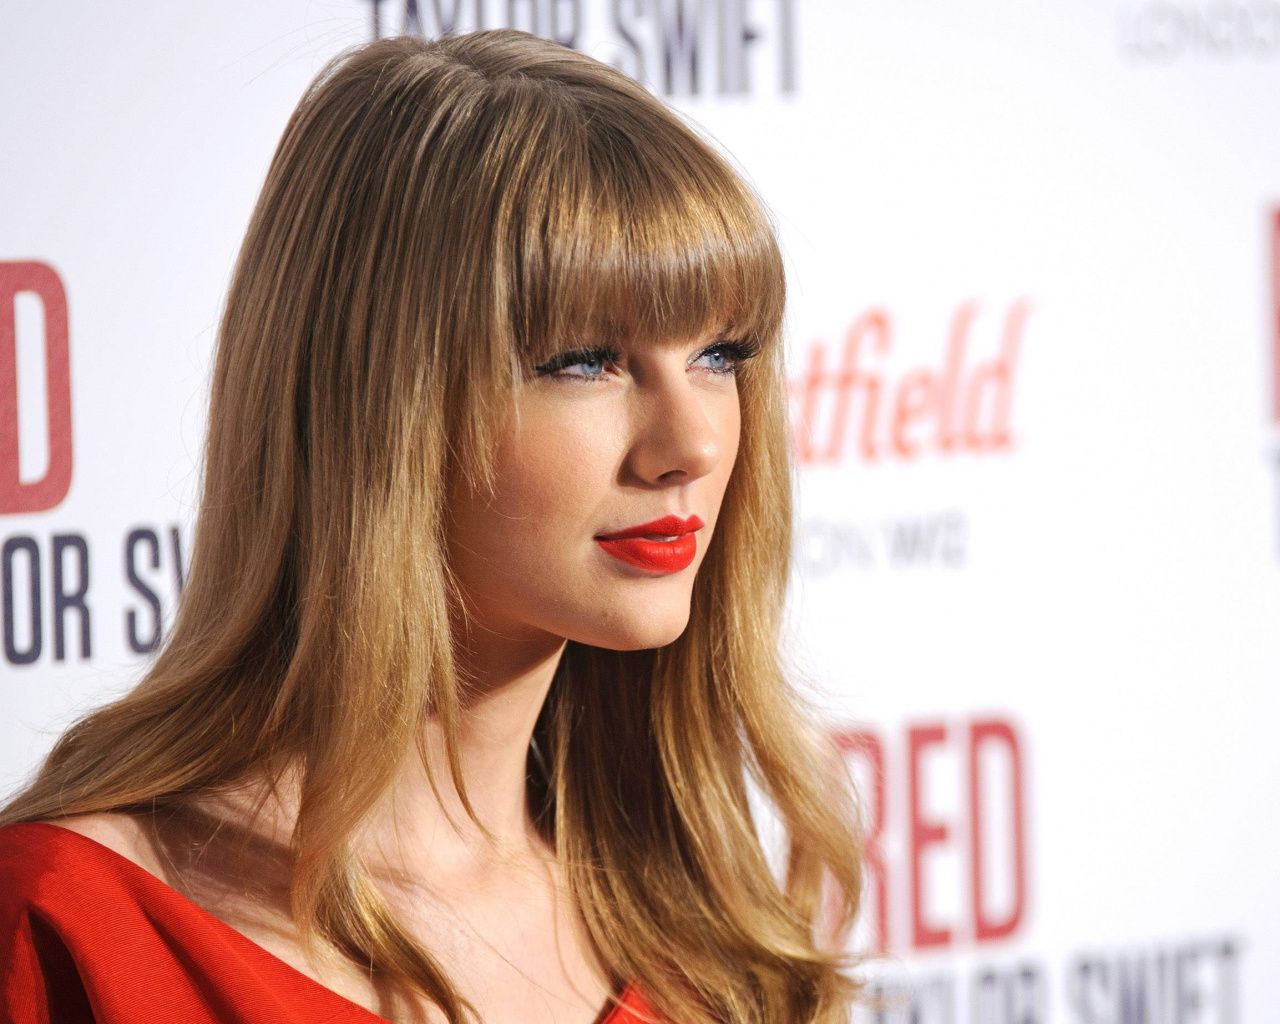 Download Gorgeous, singer, red lips, Taylor Swift wallpaper, 1280x Standard 5: Fullscreen